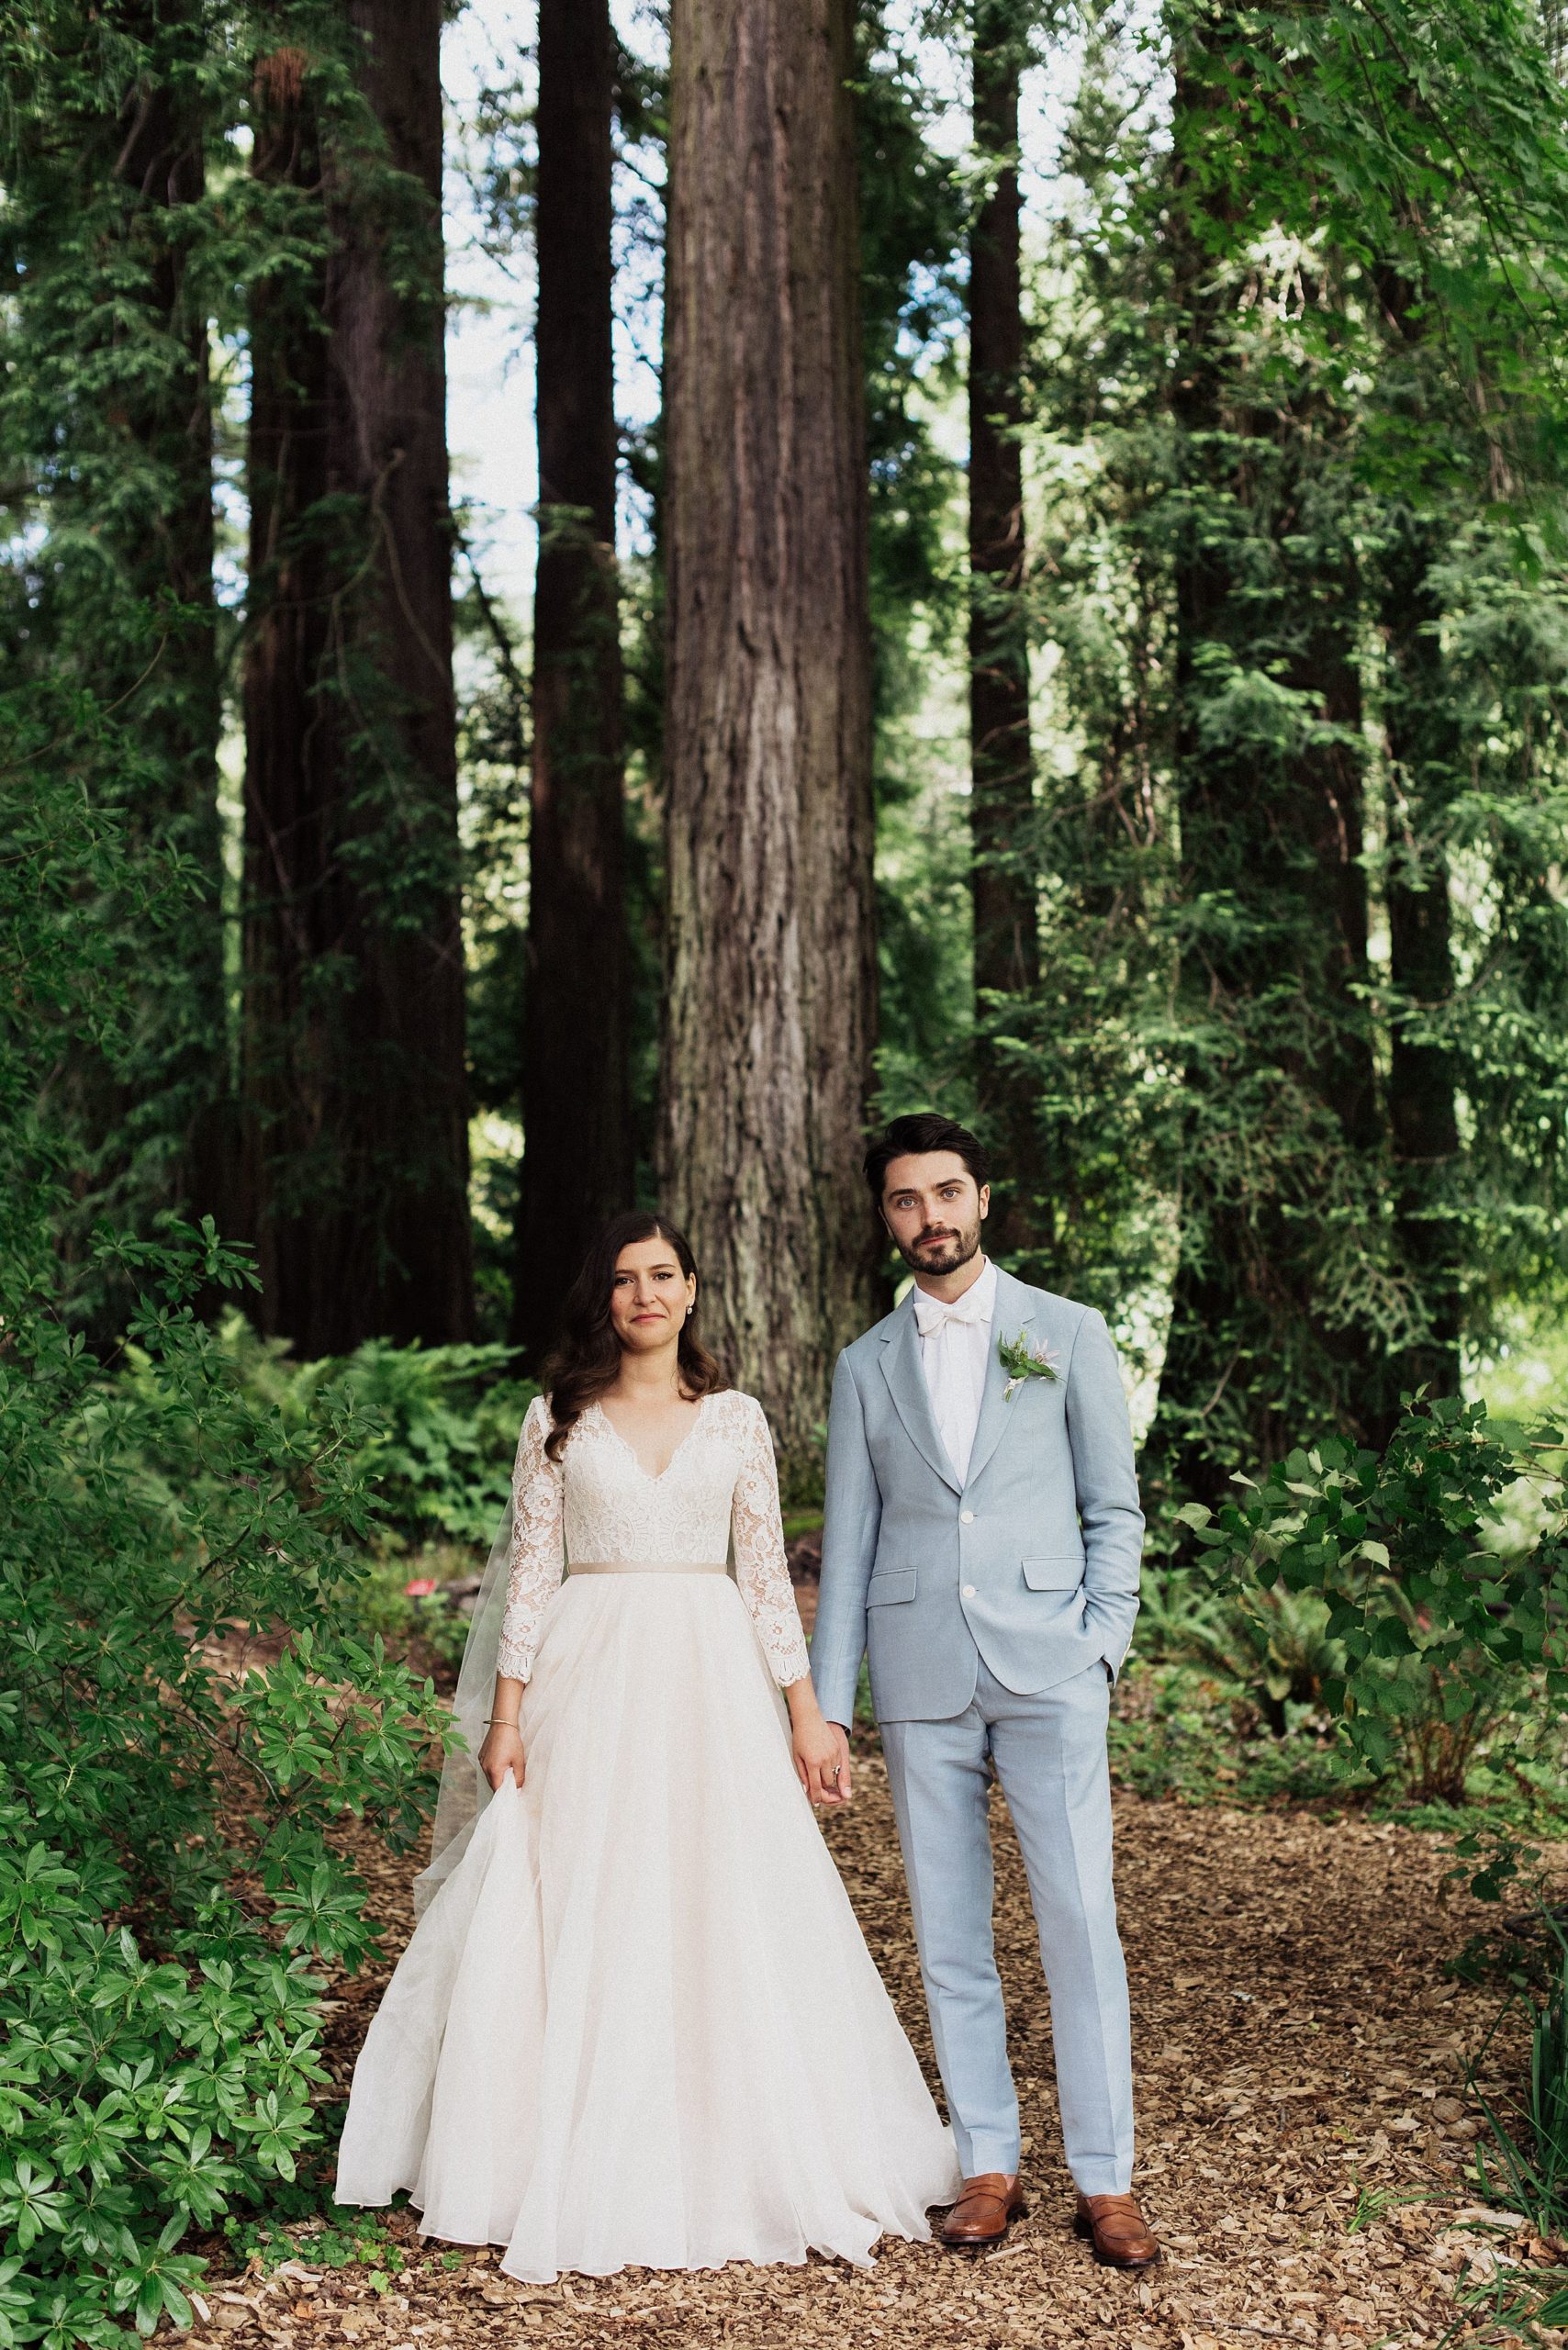 Tilden Park Wedding | Berkeley CA | Noah and Sophia - Eden Strader Blog